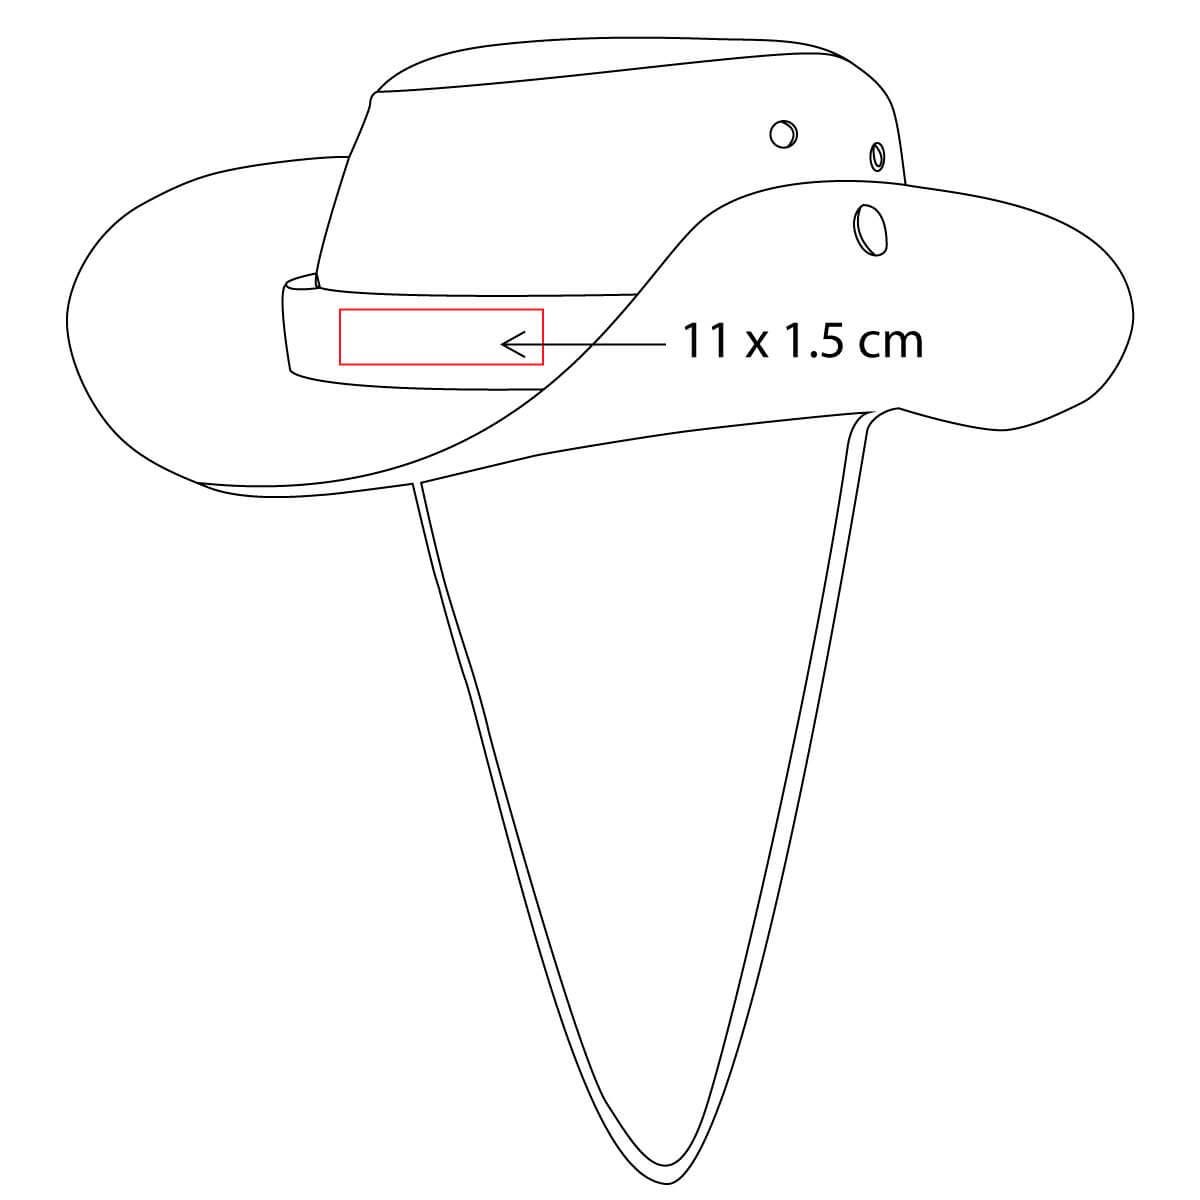 gorra sombrero-mojave